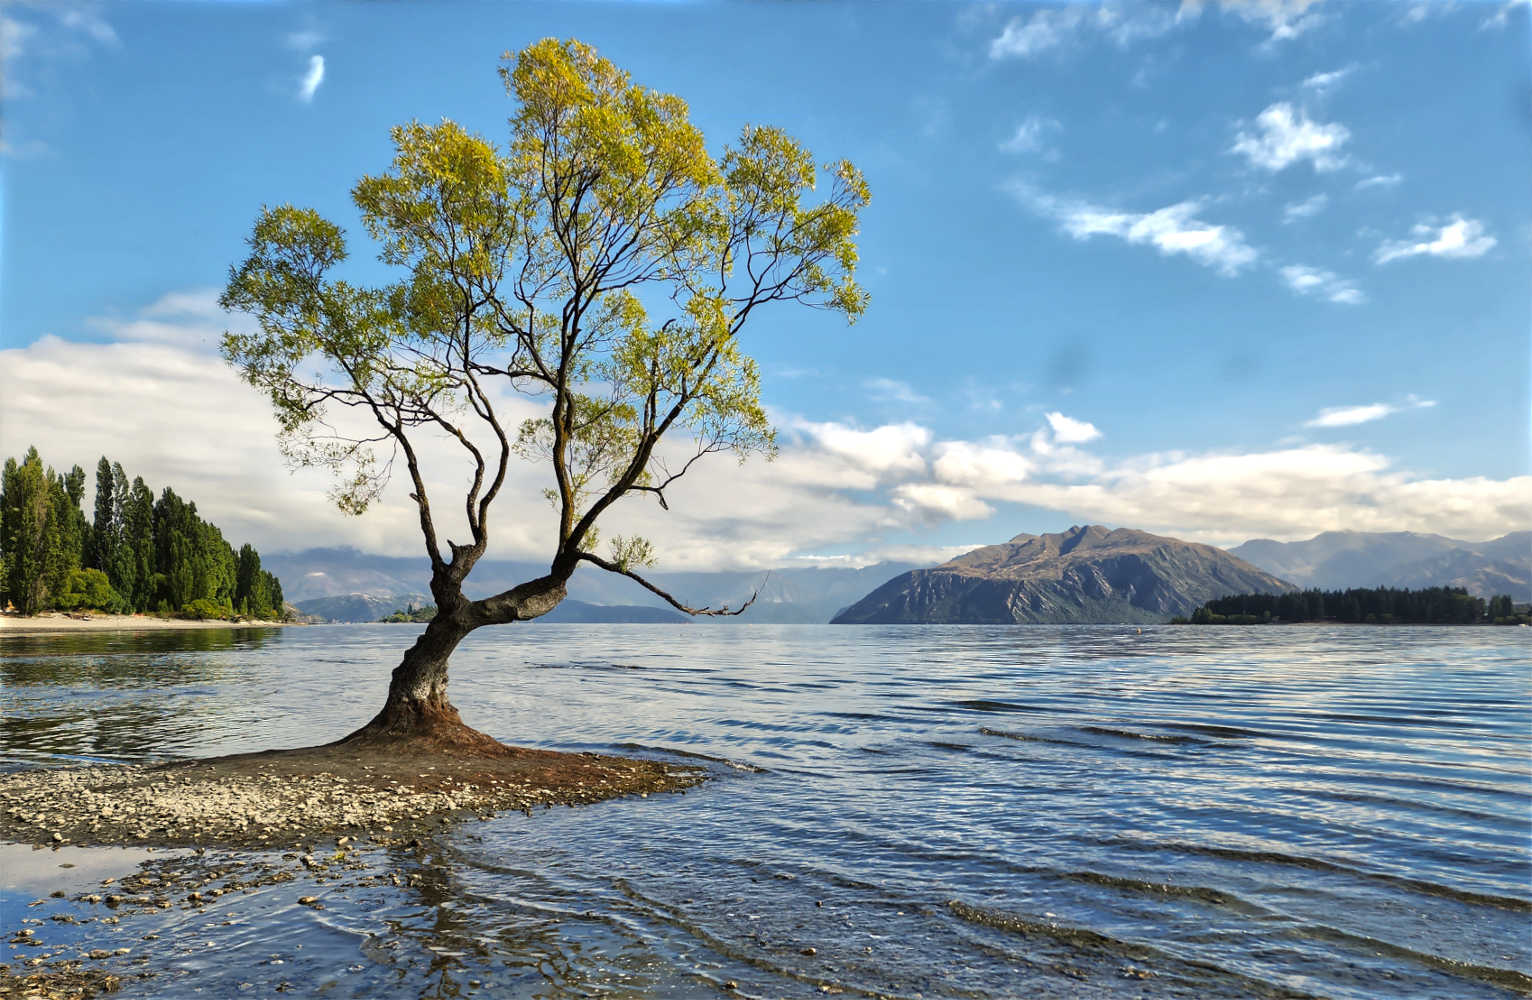 Wanaka selfie location #thatwanakatree, summer lake level is low, South Island, New Zealand